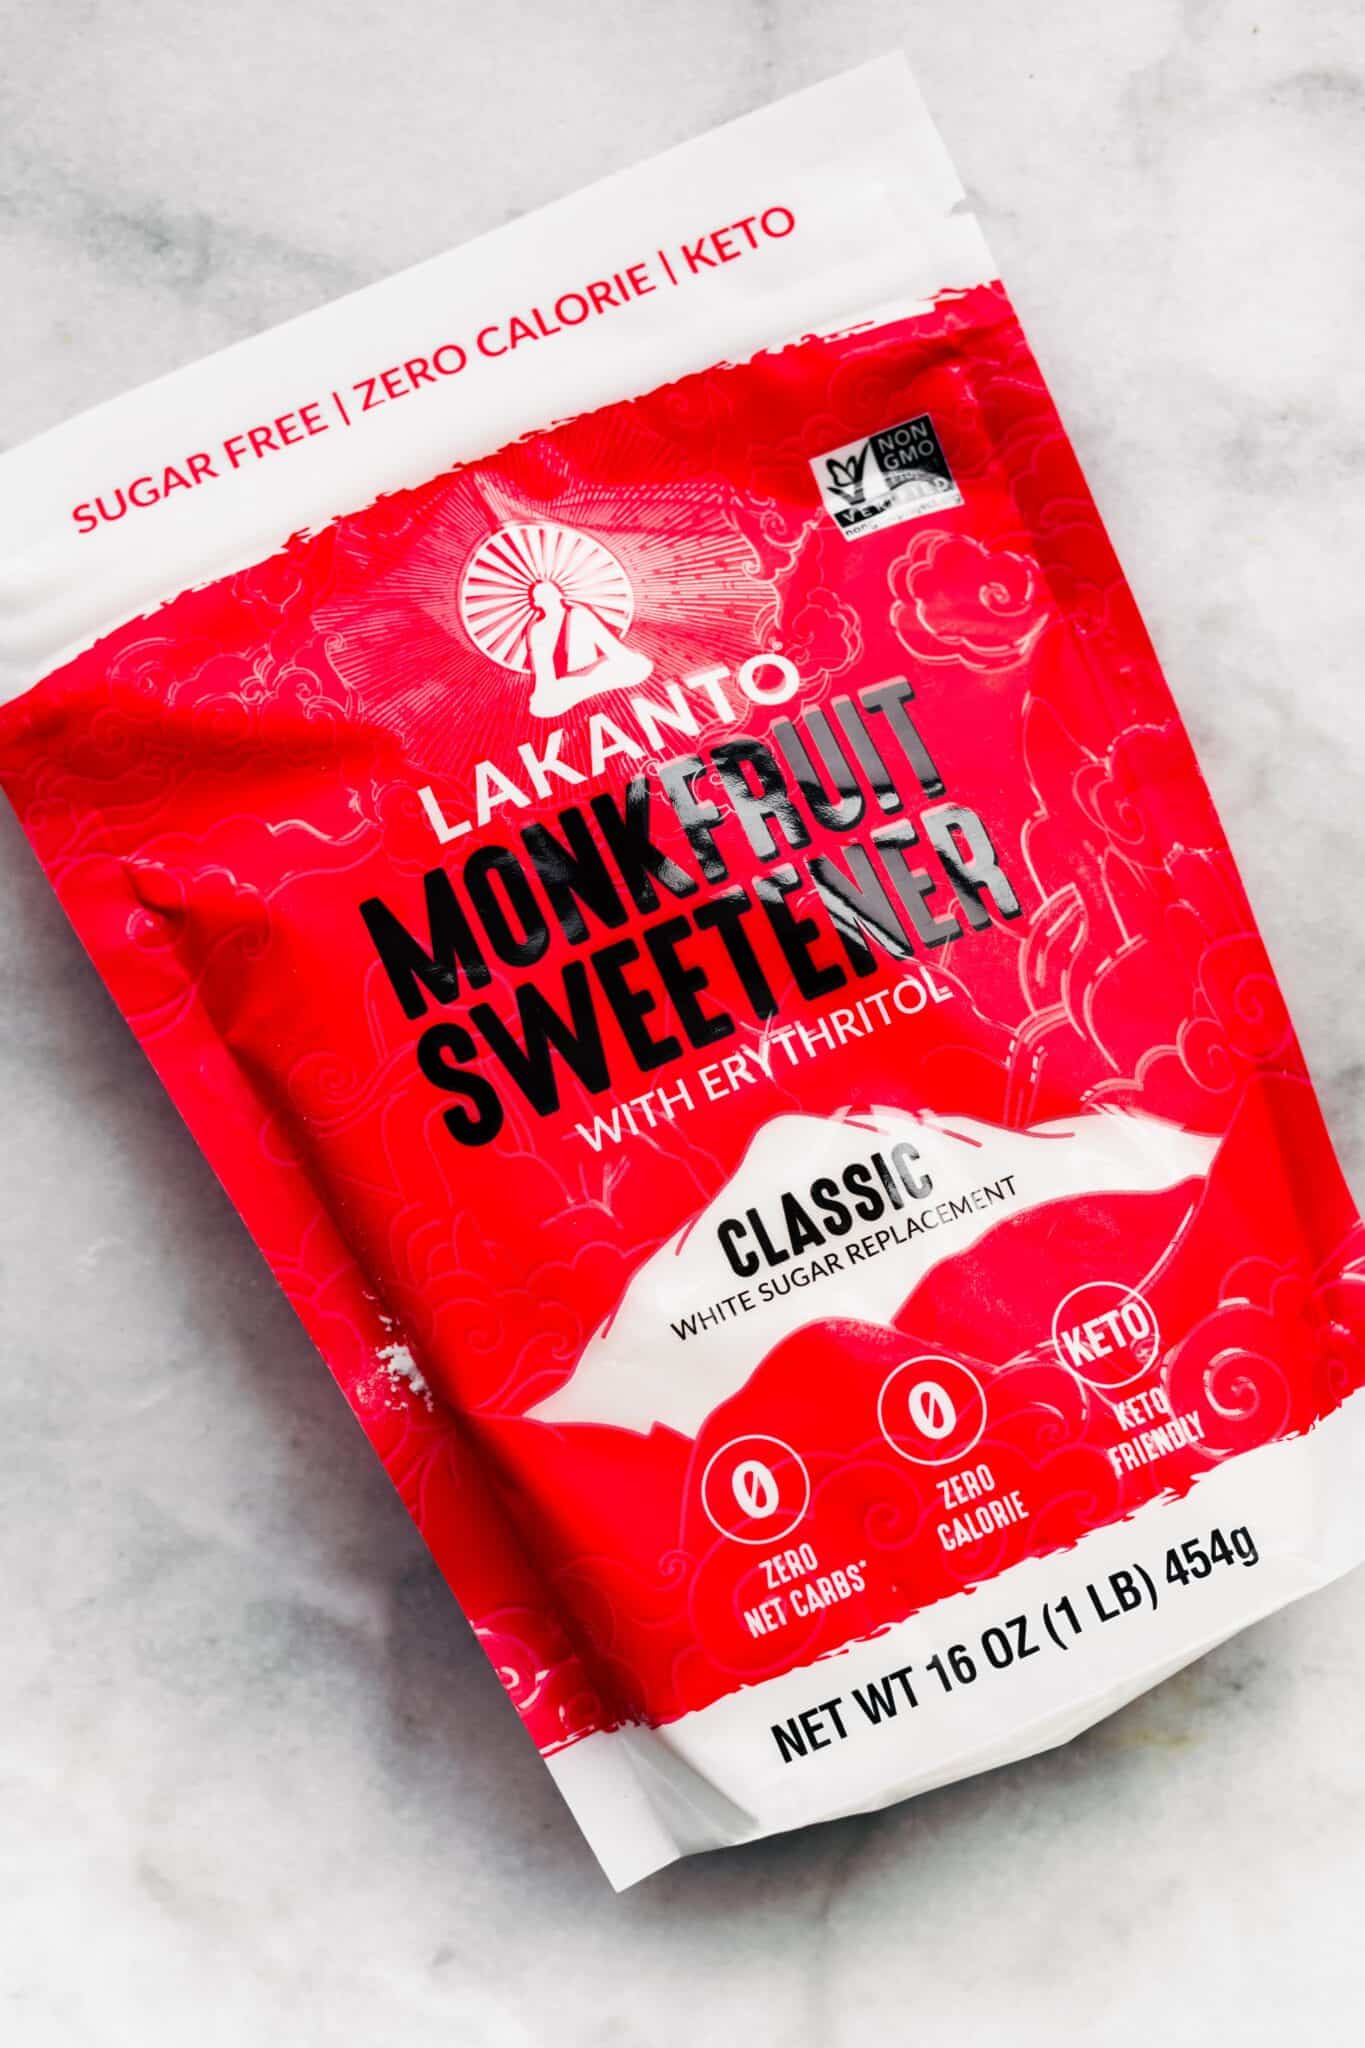 Lakanto classic monkfruit sweetener bag on a white marble countertop.